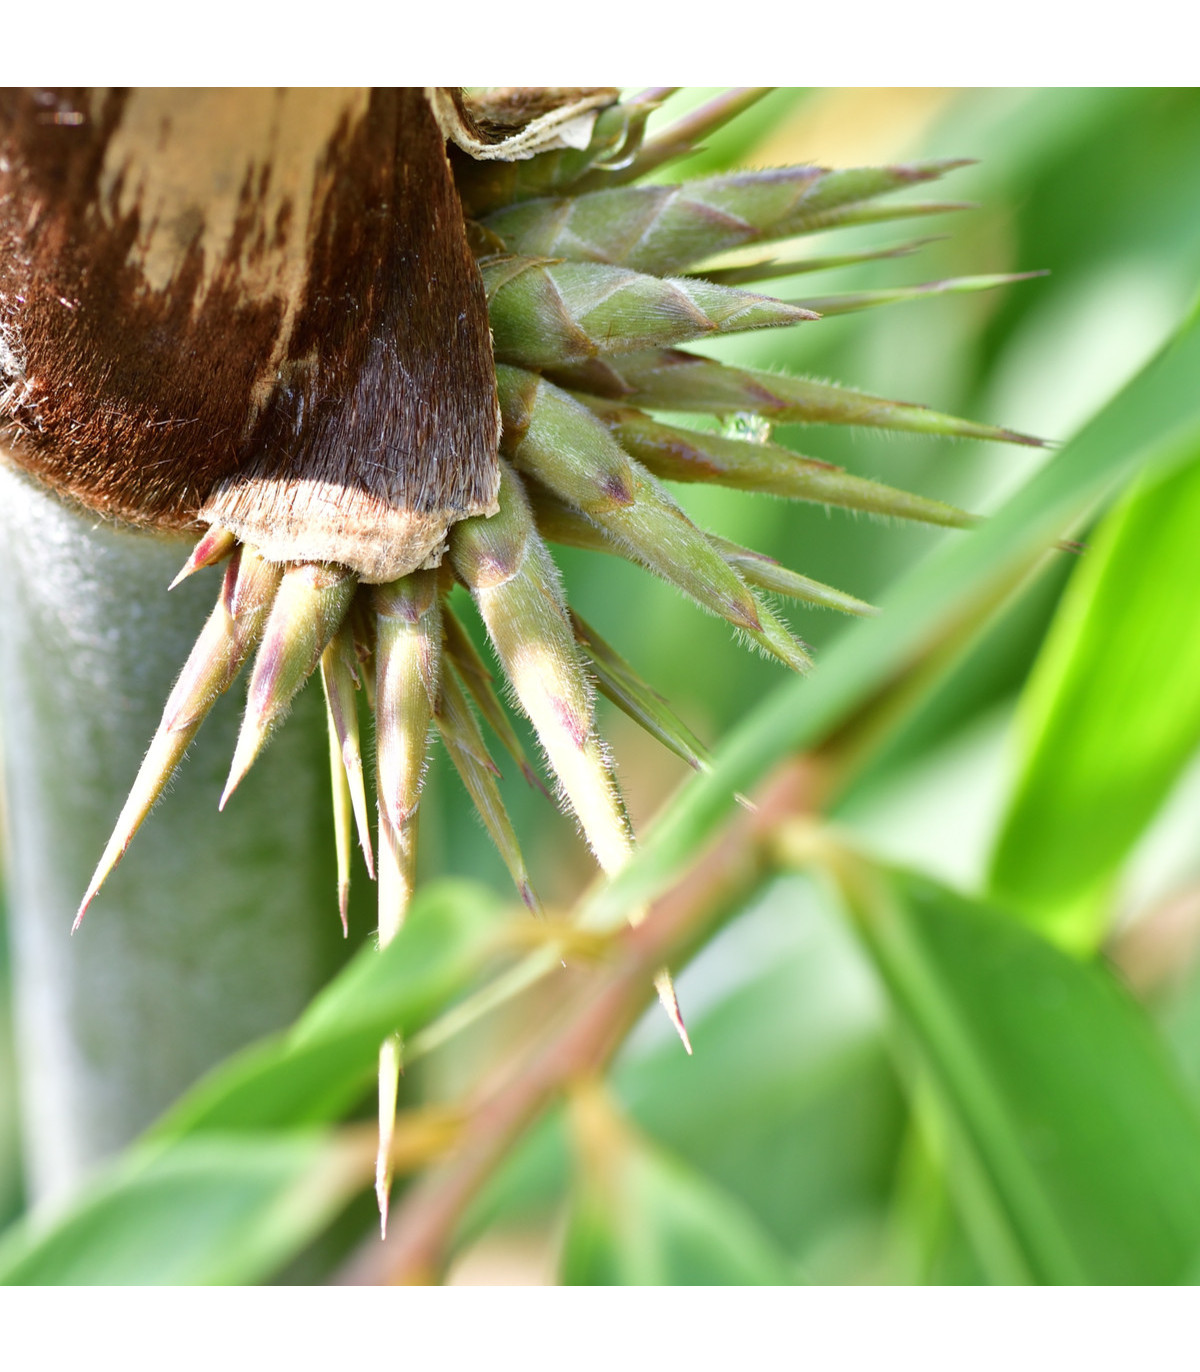 Bambus železný - Dendrocalamus Strictus  - semena - 2 ks